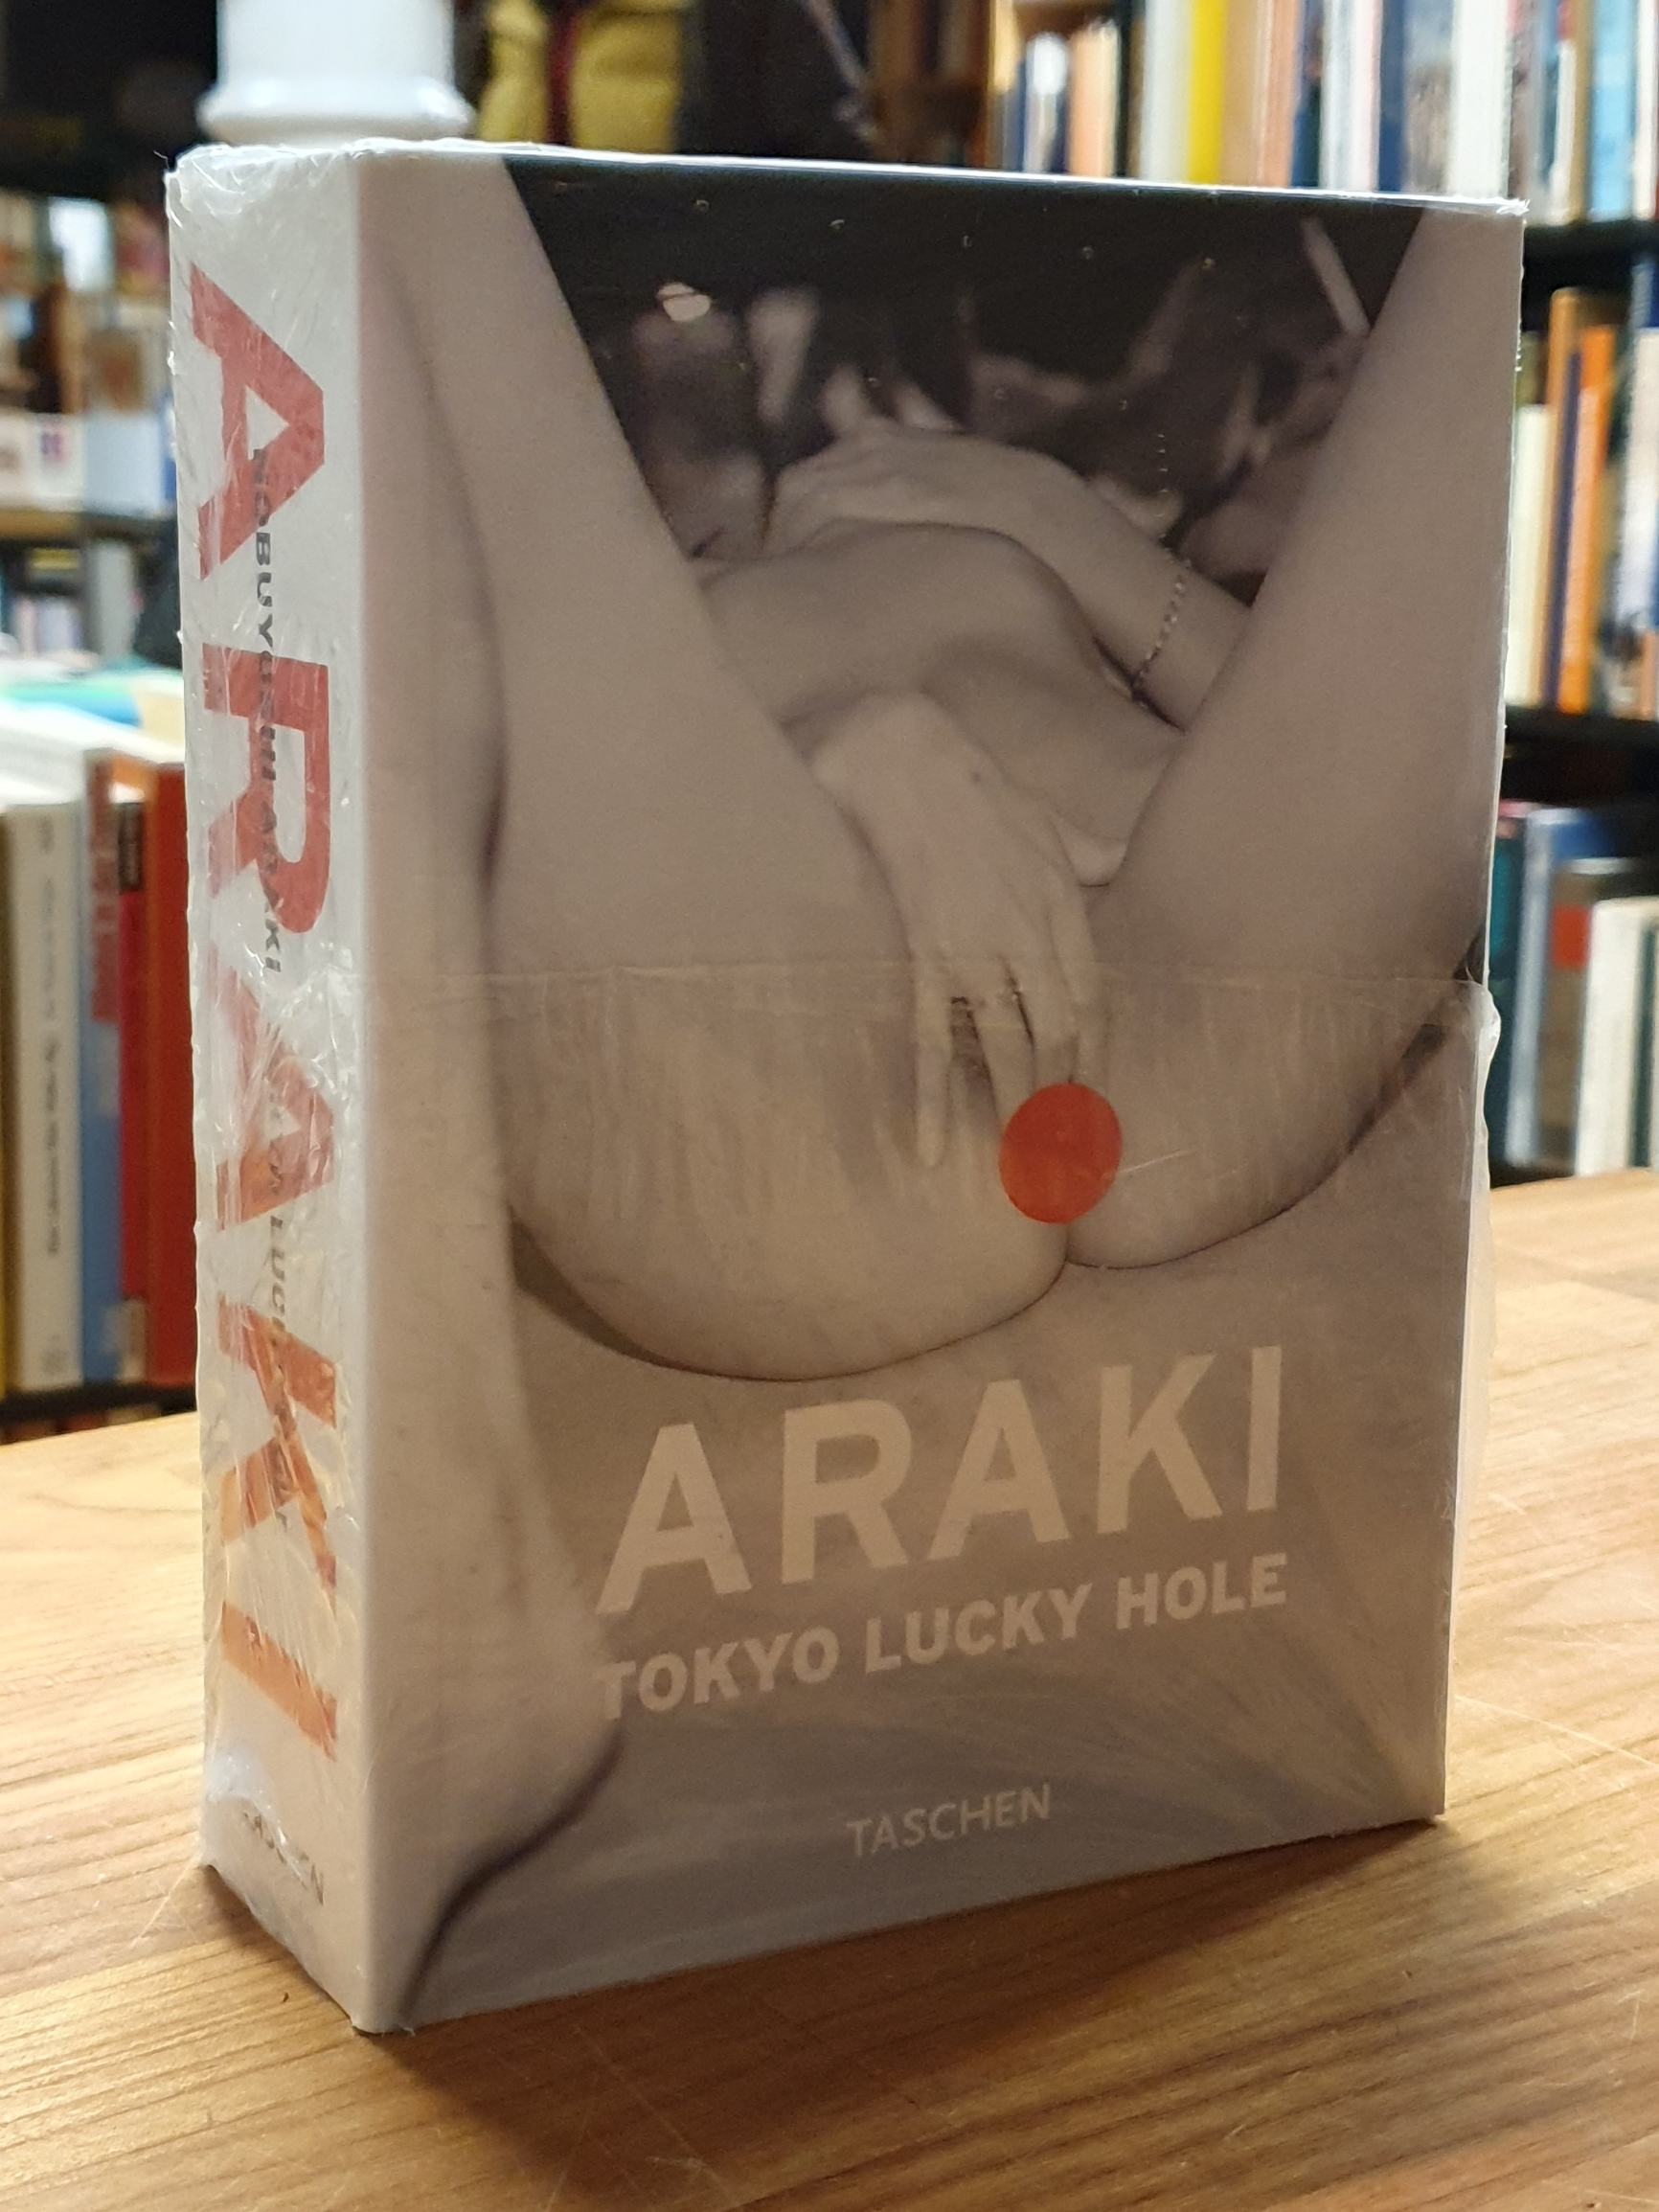 Tokyo Lucky Hole,